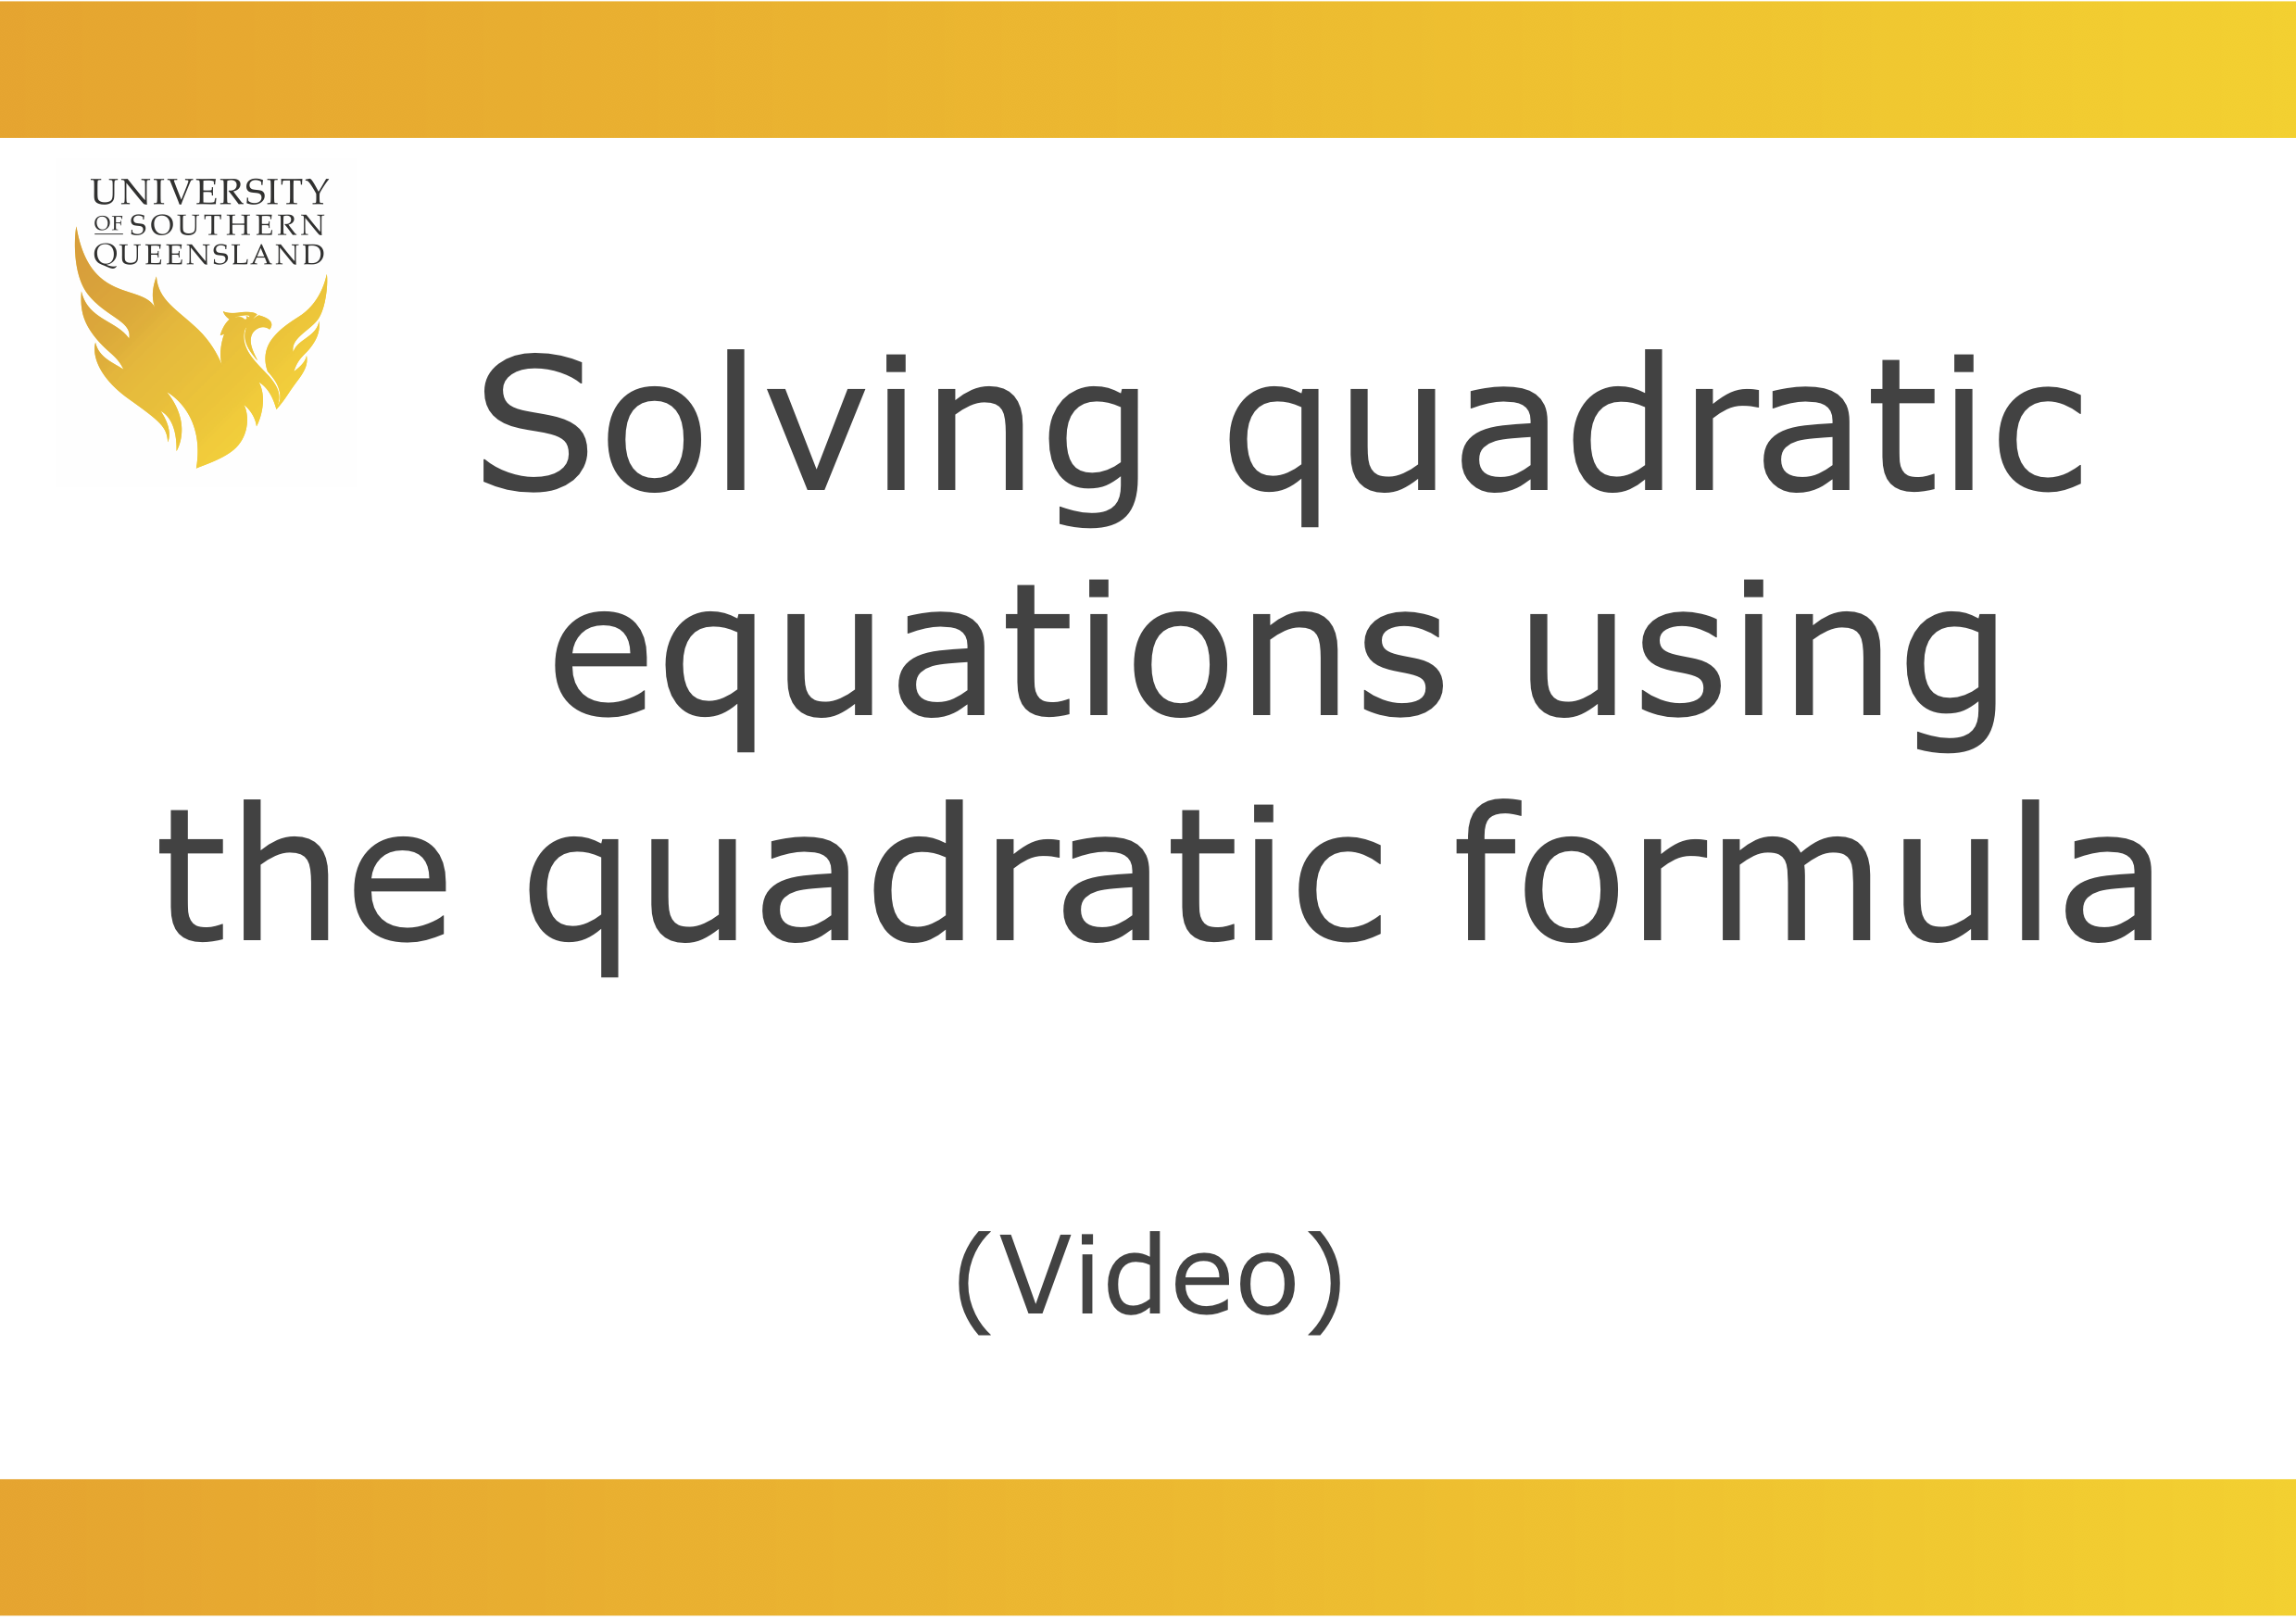 Solving quadratic equations using the quadratic formula video